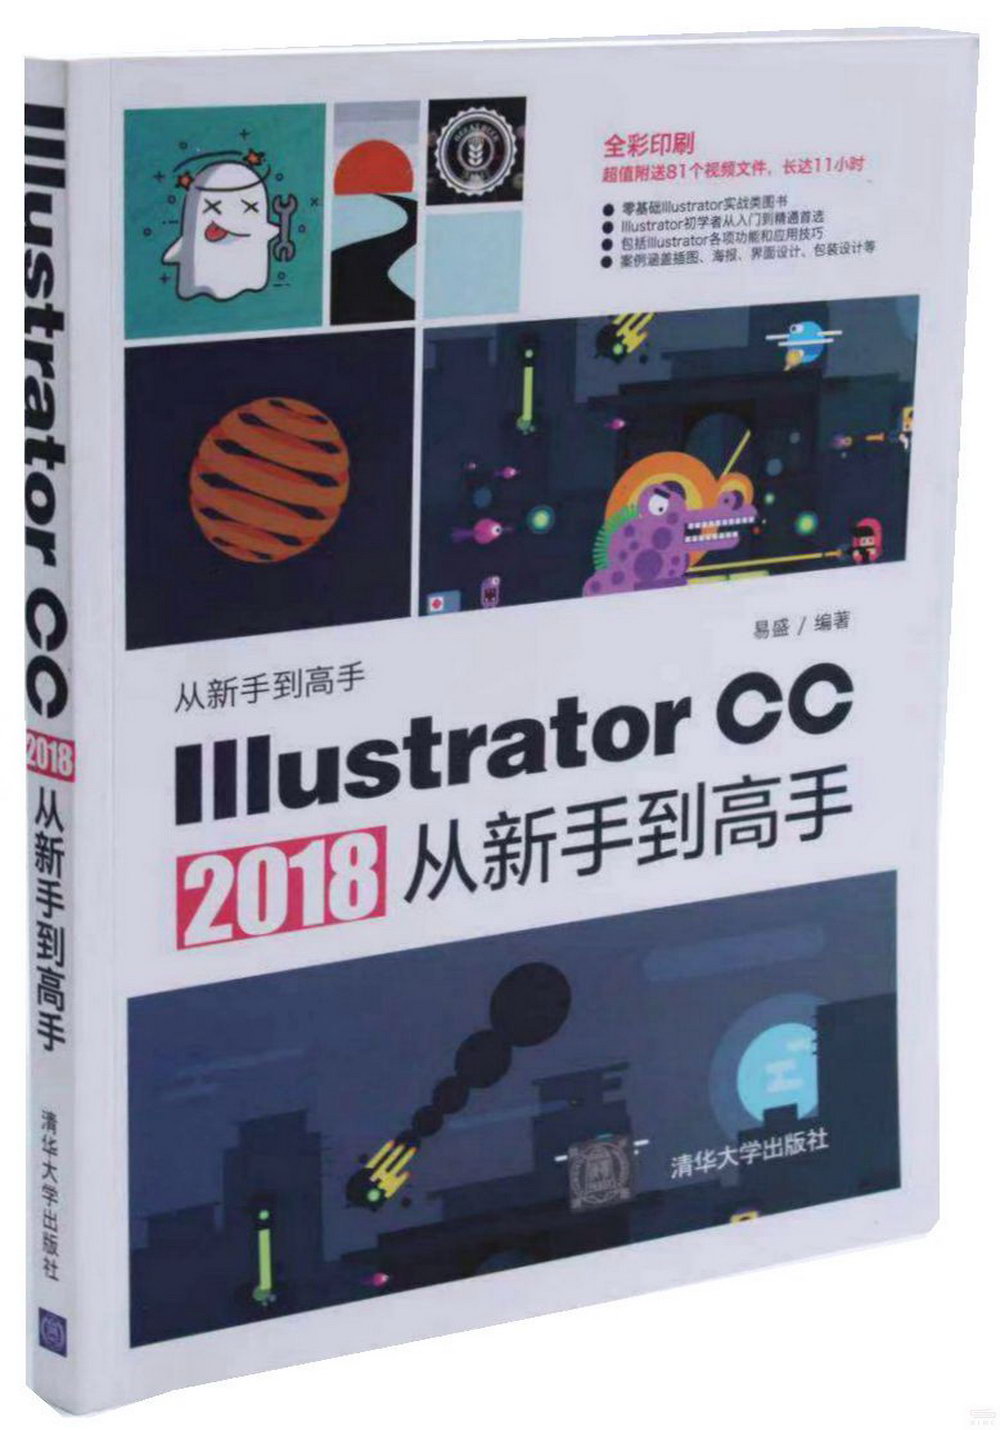 Illustrator CC 2018從新手到高手